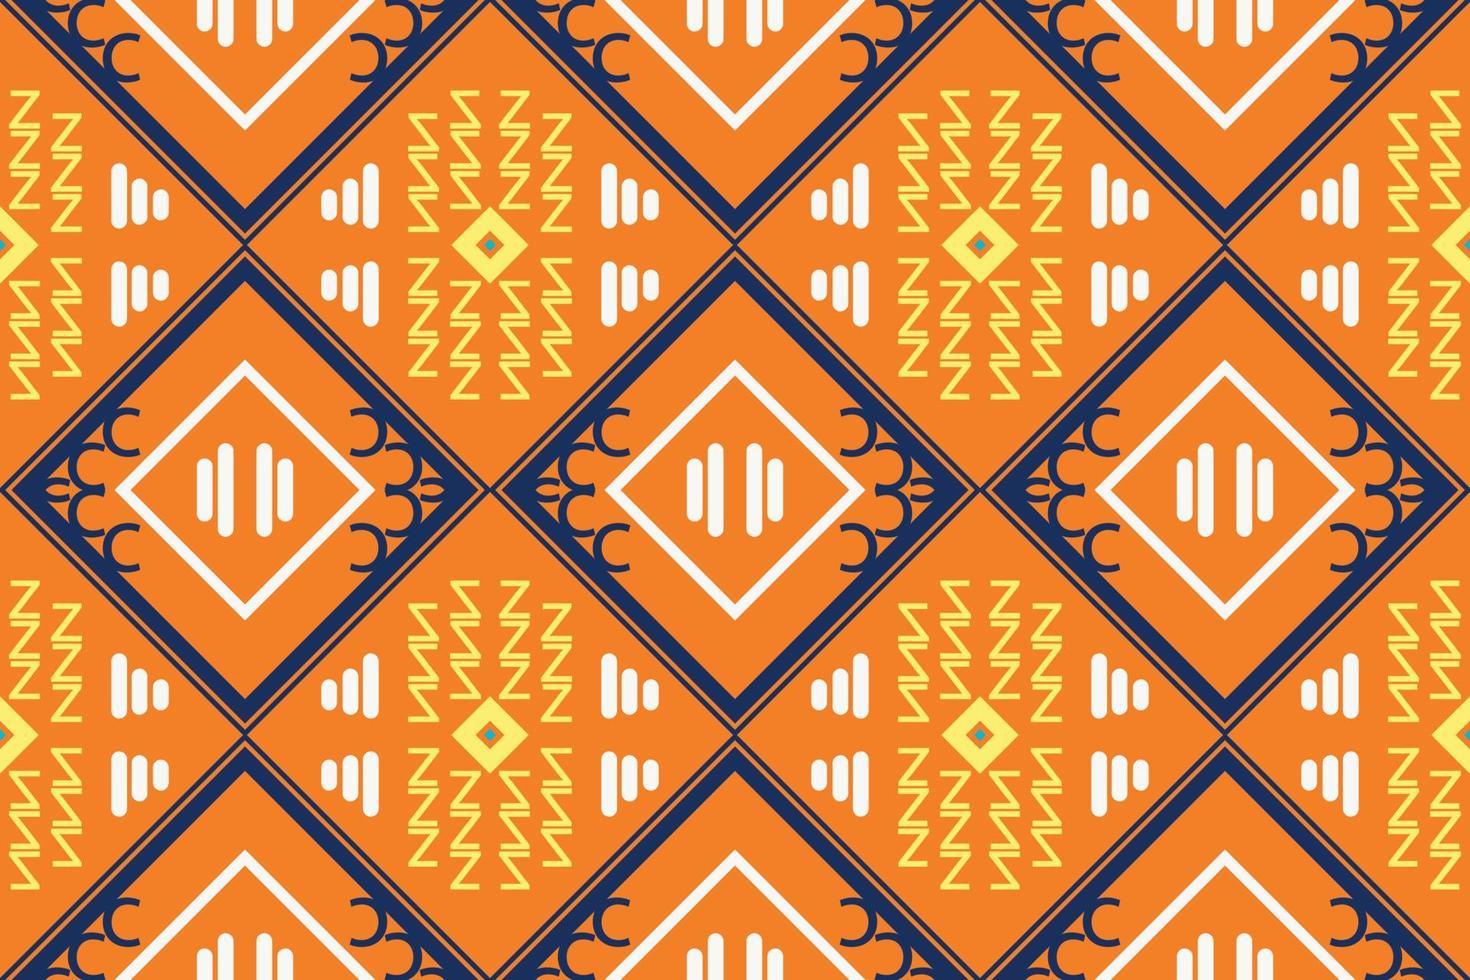 étnico asteca ikat padrão sem costura têxtil ikat moldura sem costura padrão design de vetor digital para impressão saree kurti borneo tecido asteca pincel símbolos amostras elegantes